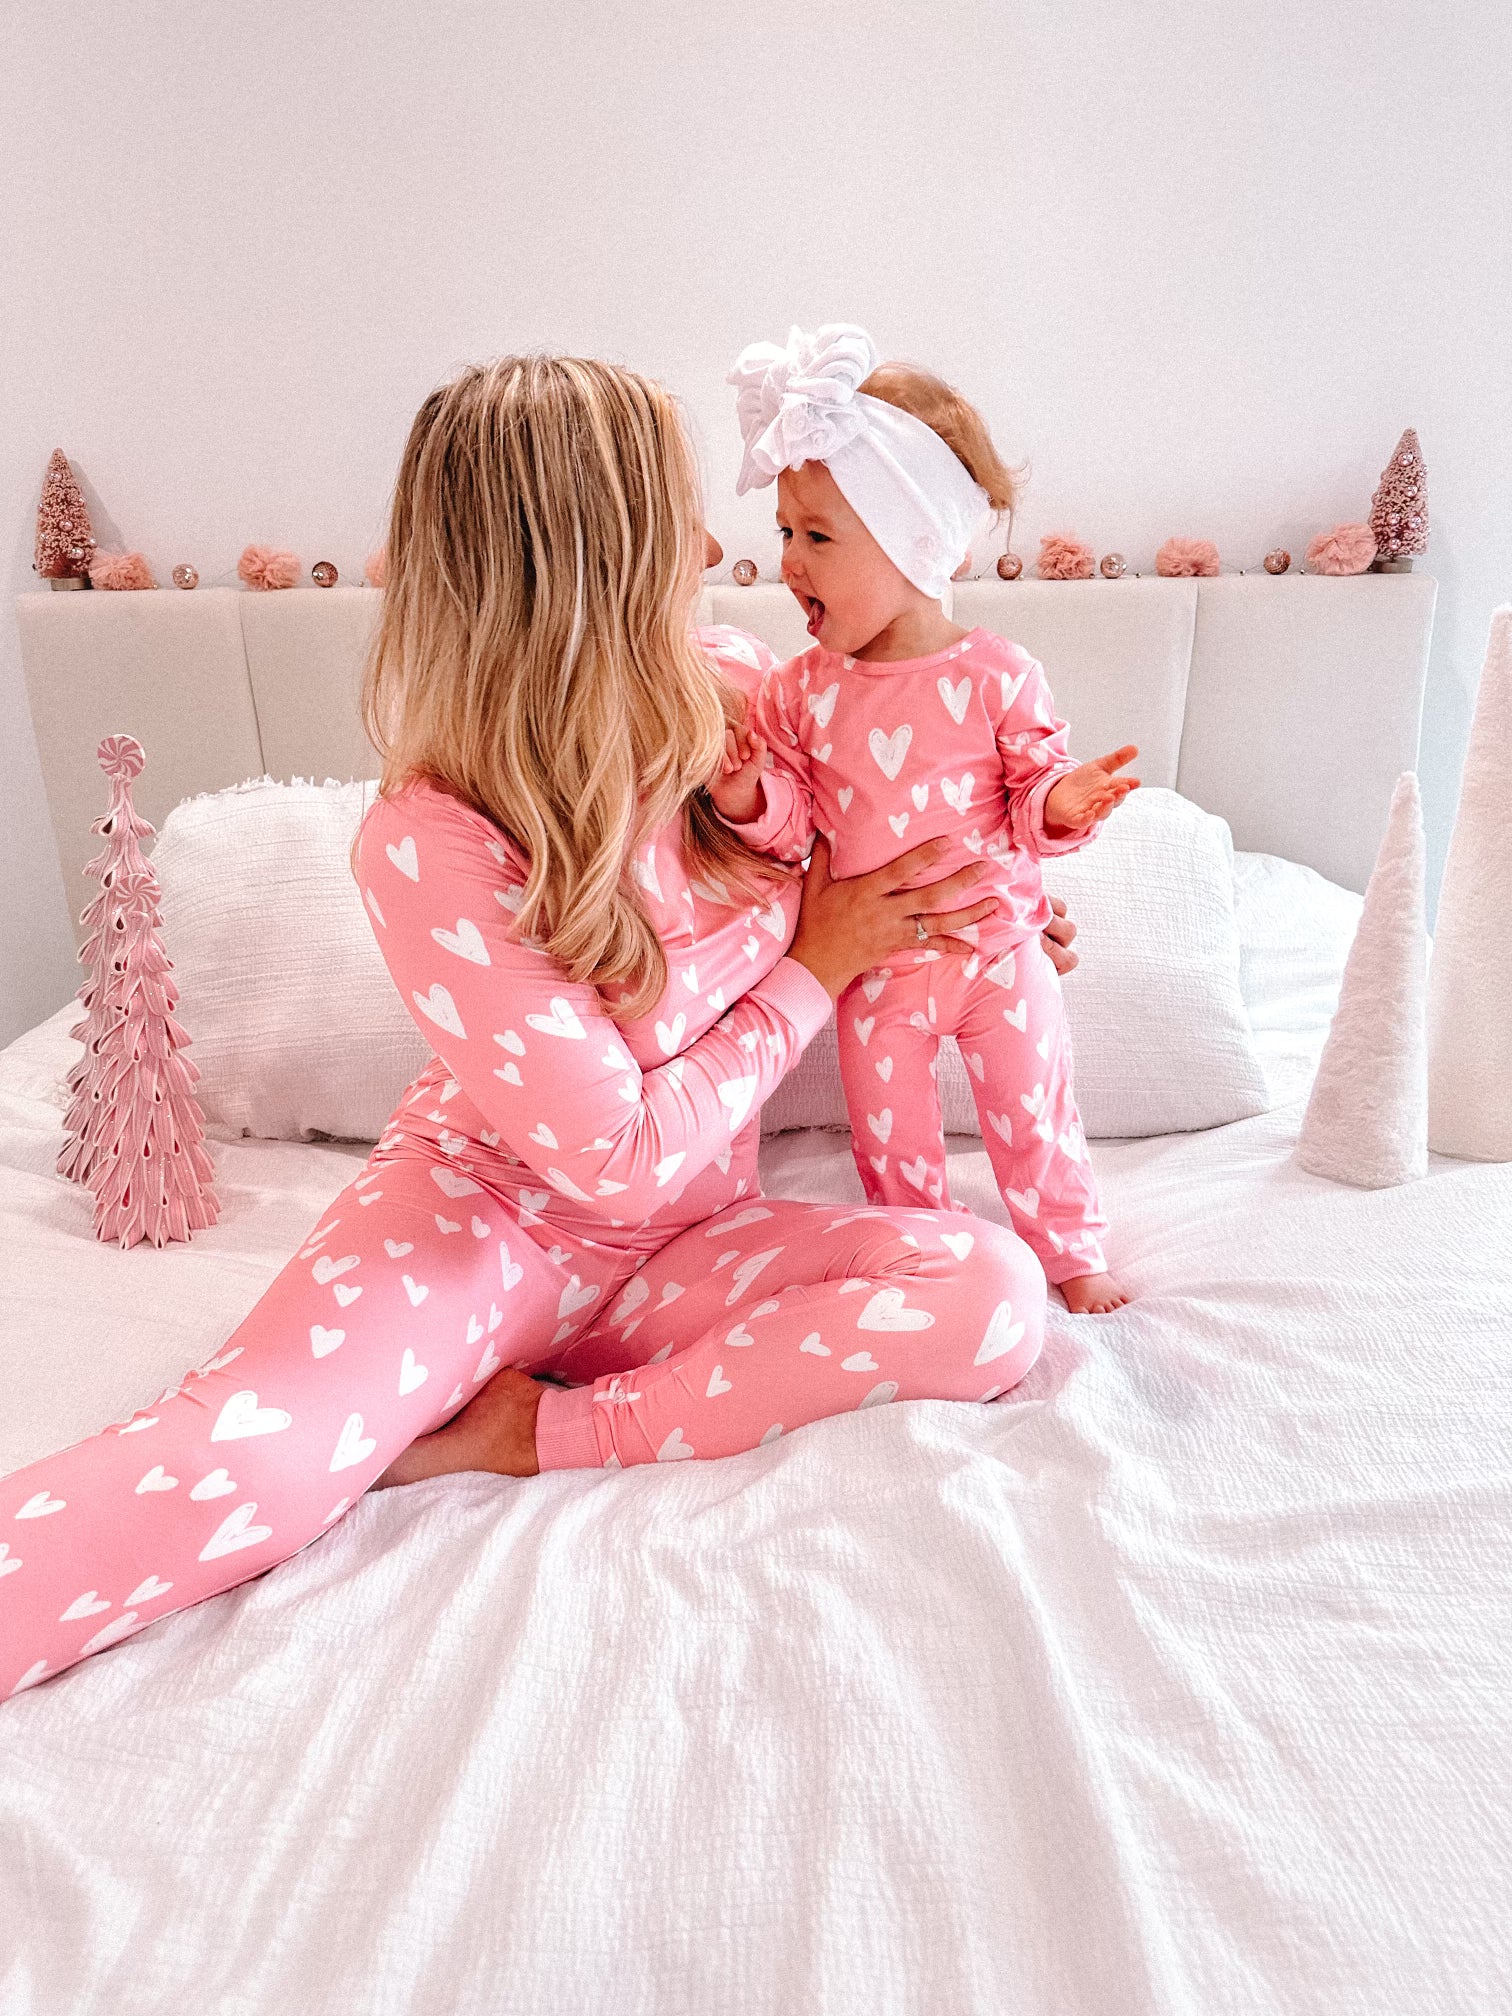 Lightweight Pajama Set - Favorite Daughter - M/L – The Good Life Boutique